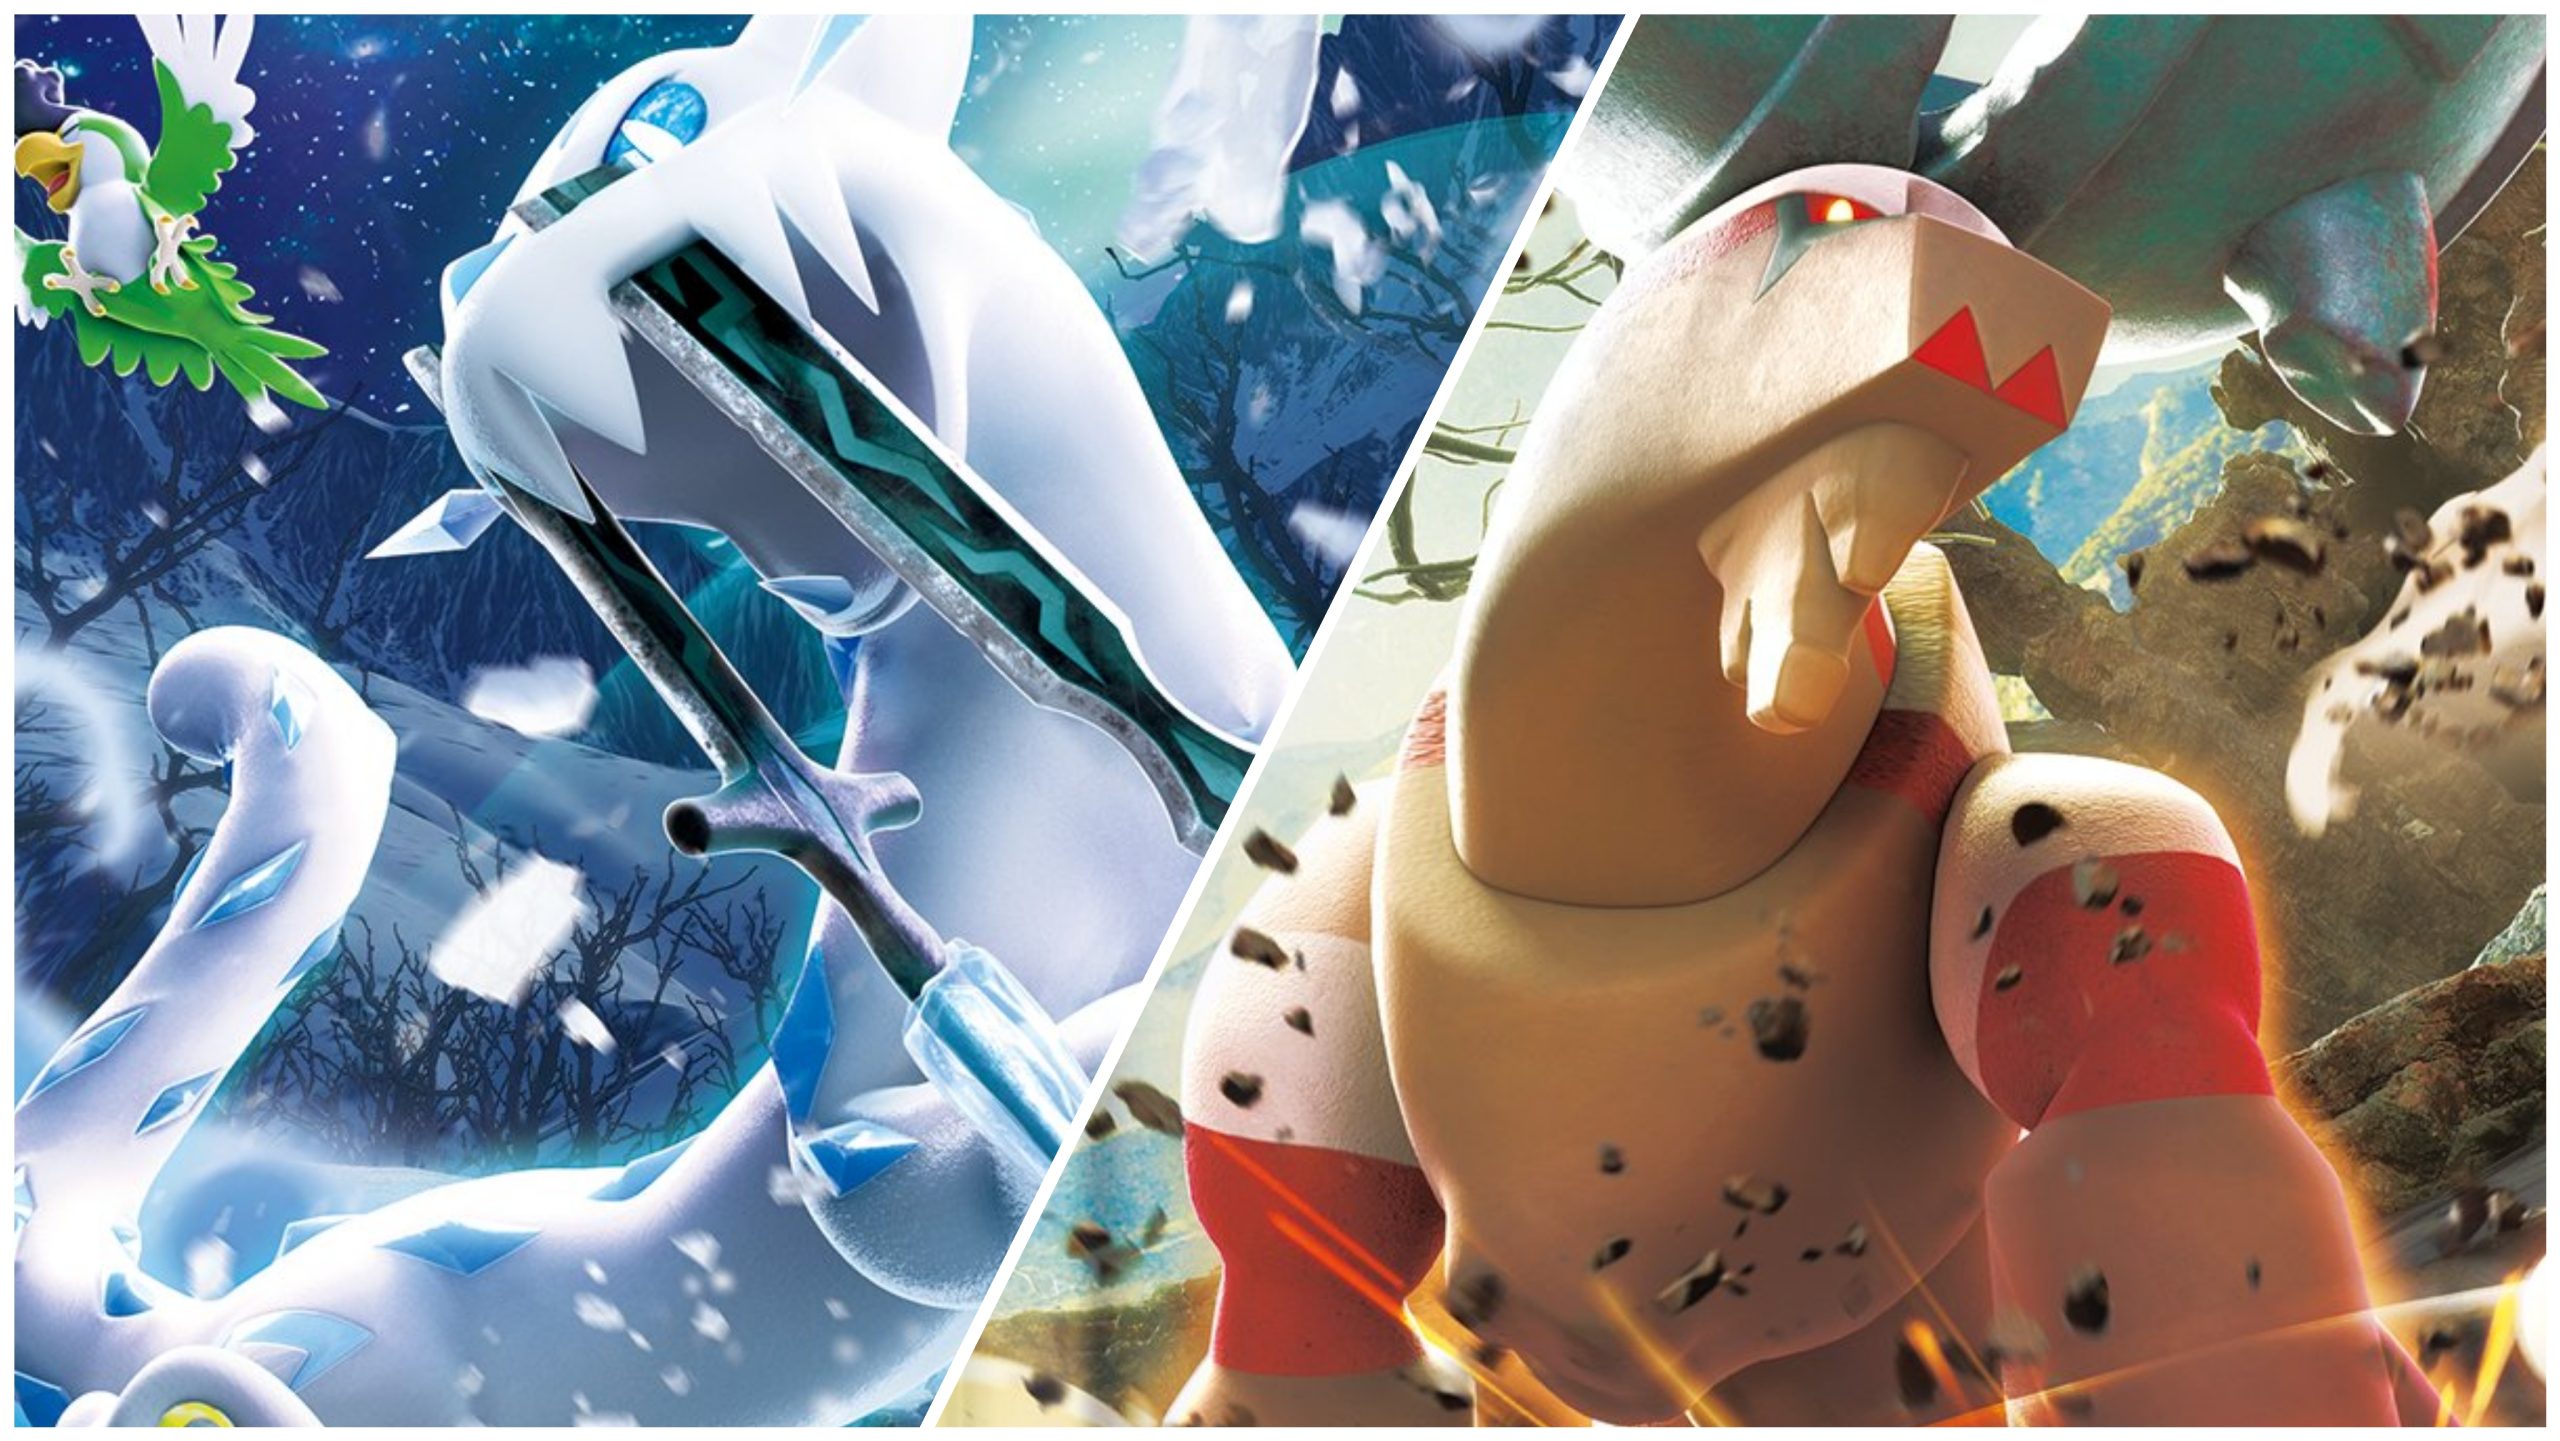 Pokémon TCG: Novo booster anunciado e cartas reveladas trazendo os Tesouros  das Ruínas! - NintendoBoy